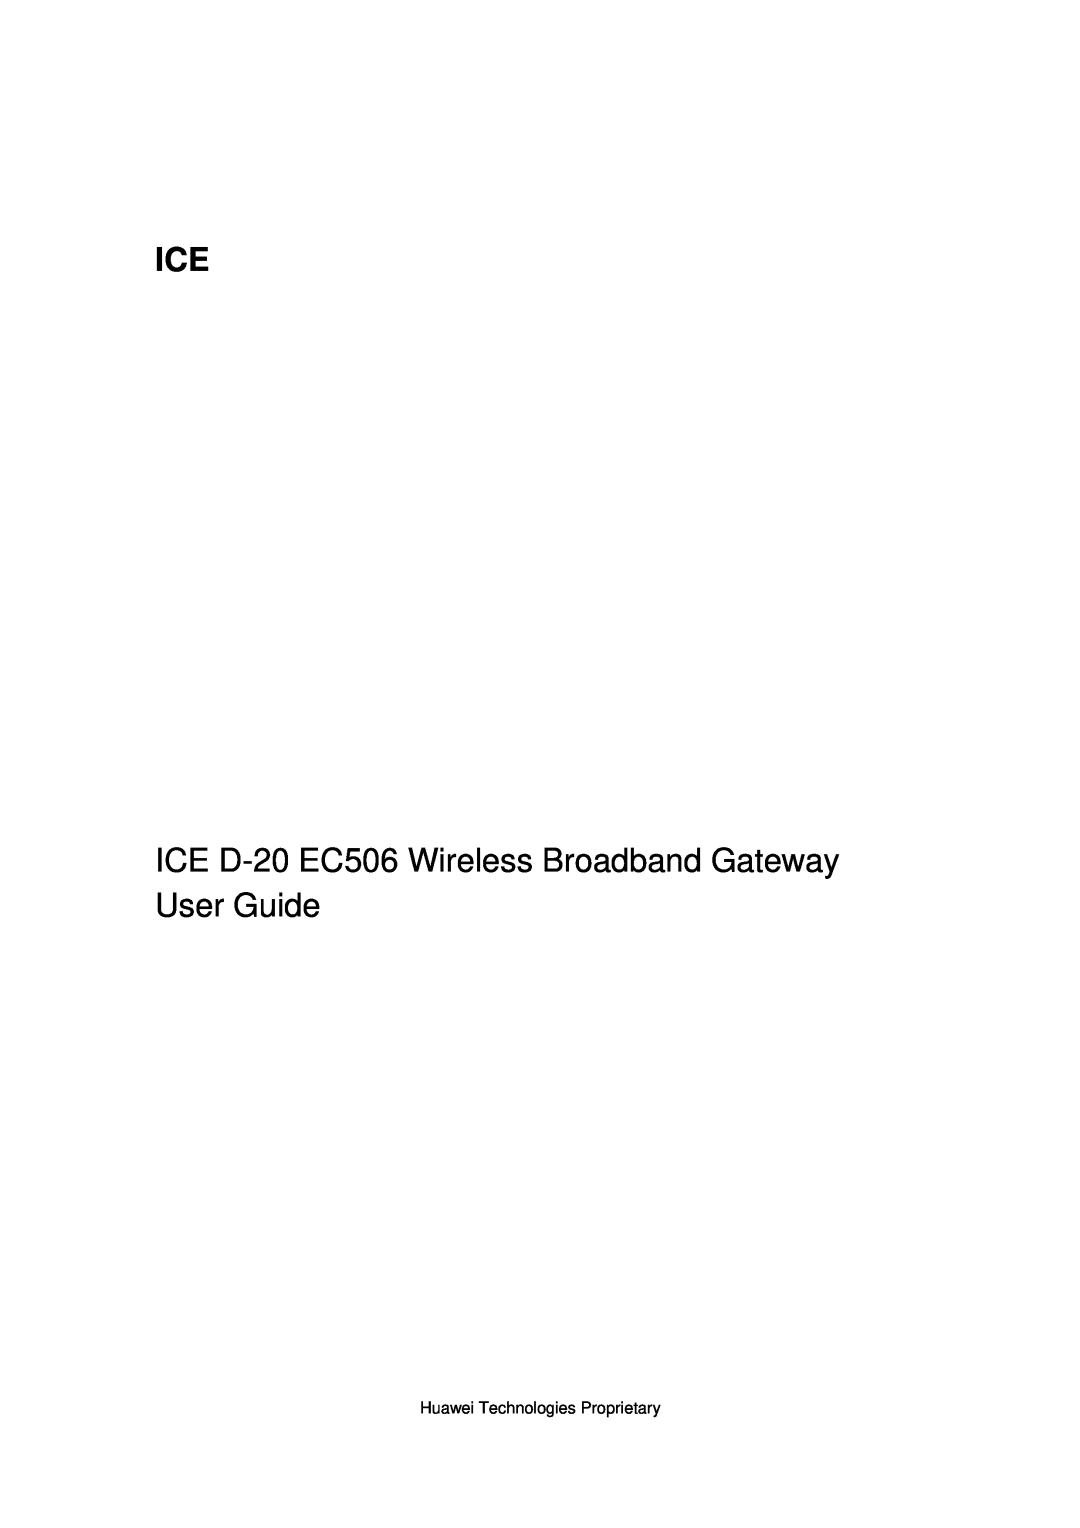 Insignia manual ICE D-20 EC506 Wireless Broadband Gateway User Guide 